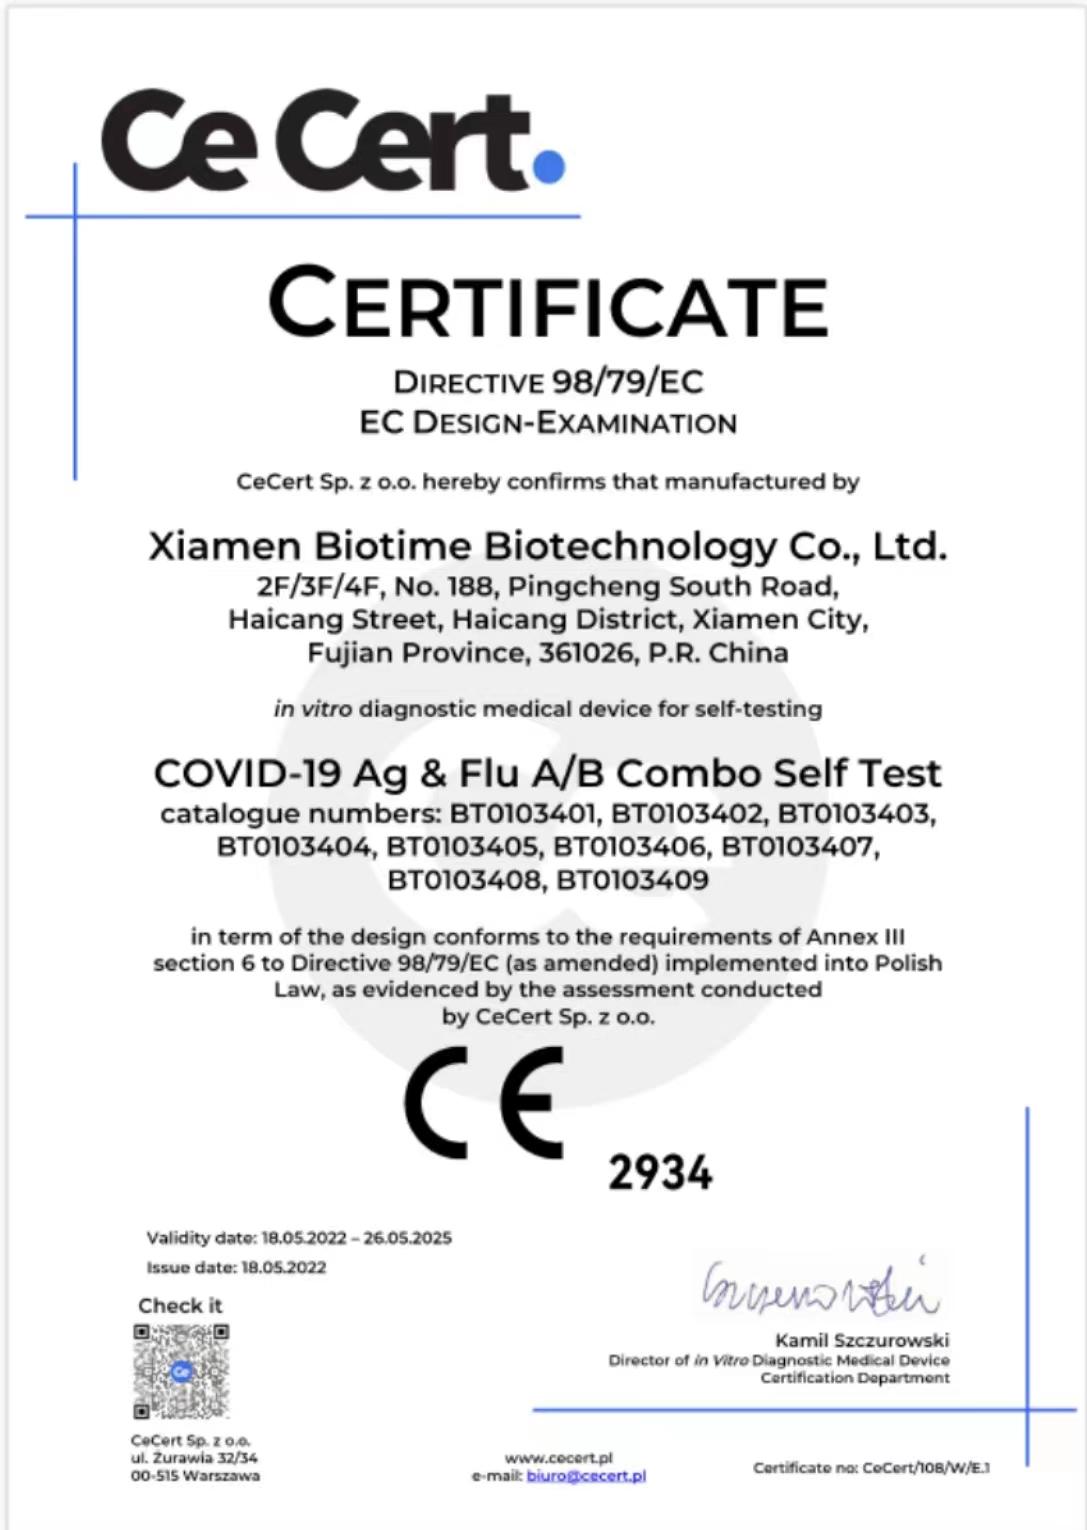 La prueba combinada biotime's COVID-19 ag & flua/b obtiene la marca CE para autodiagnóstico
